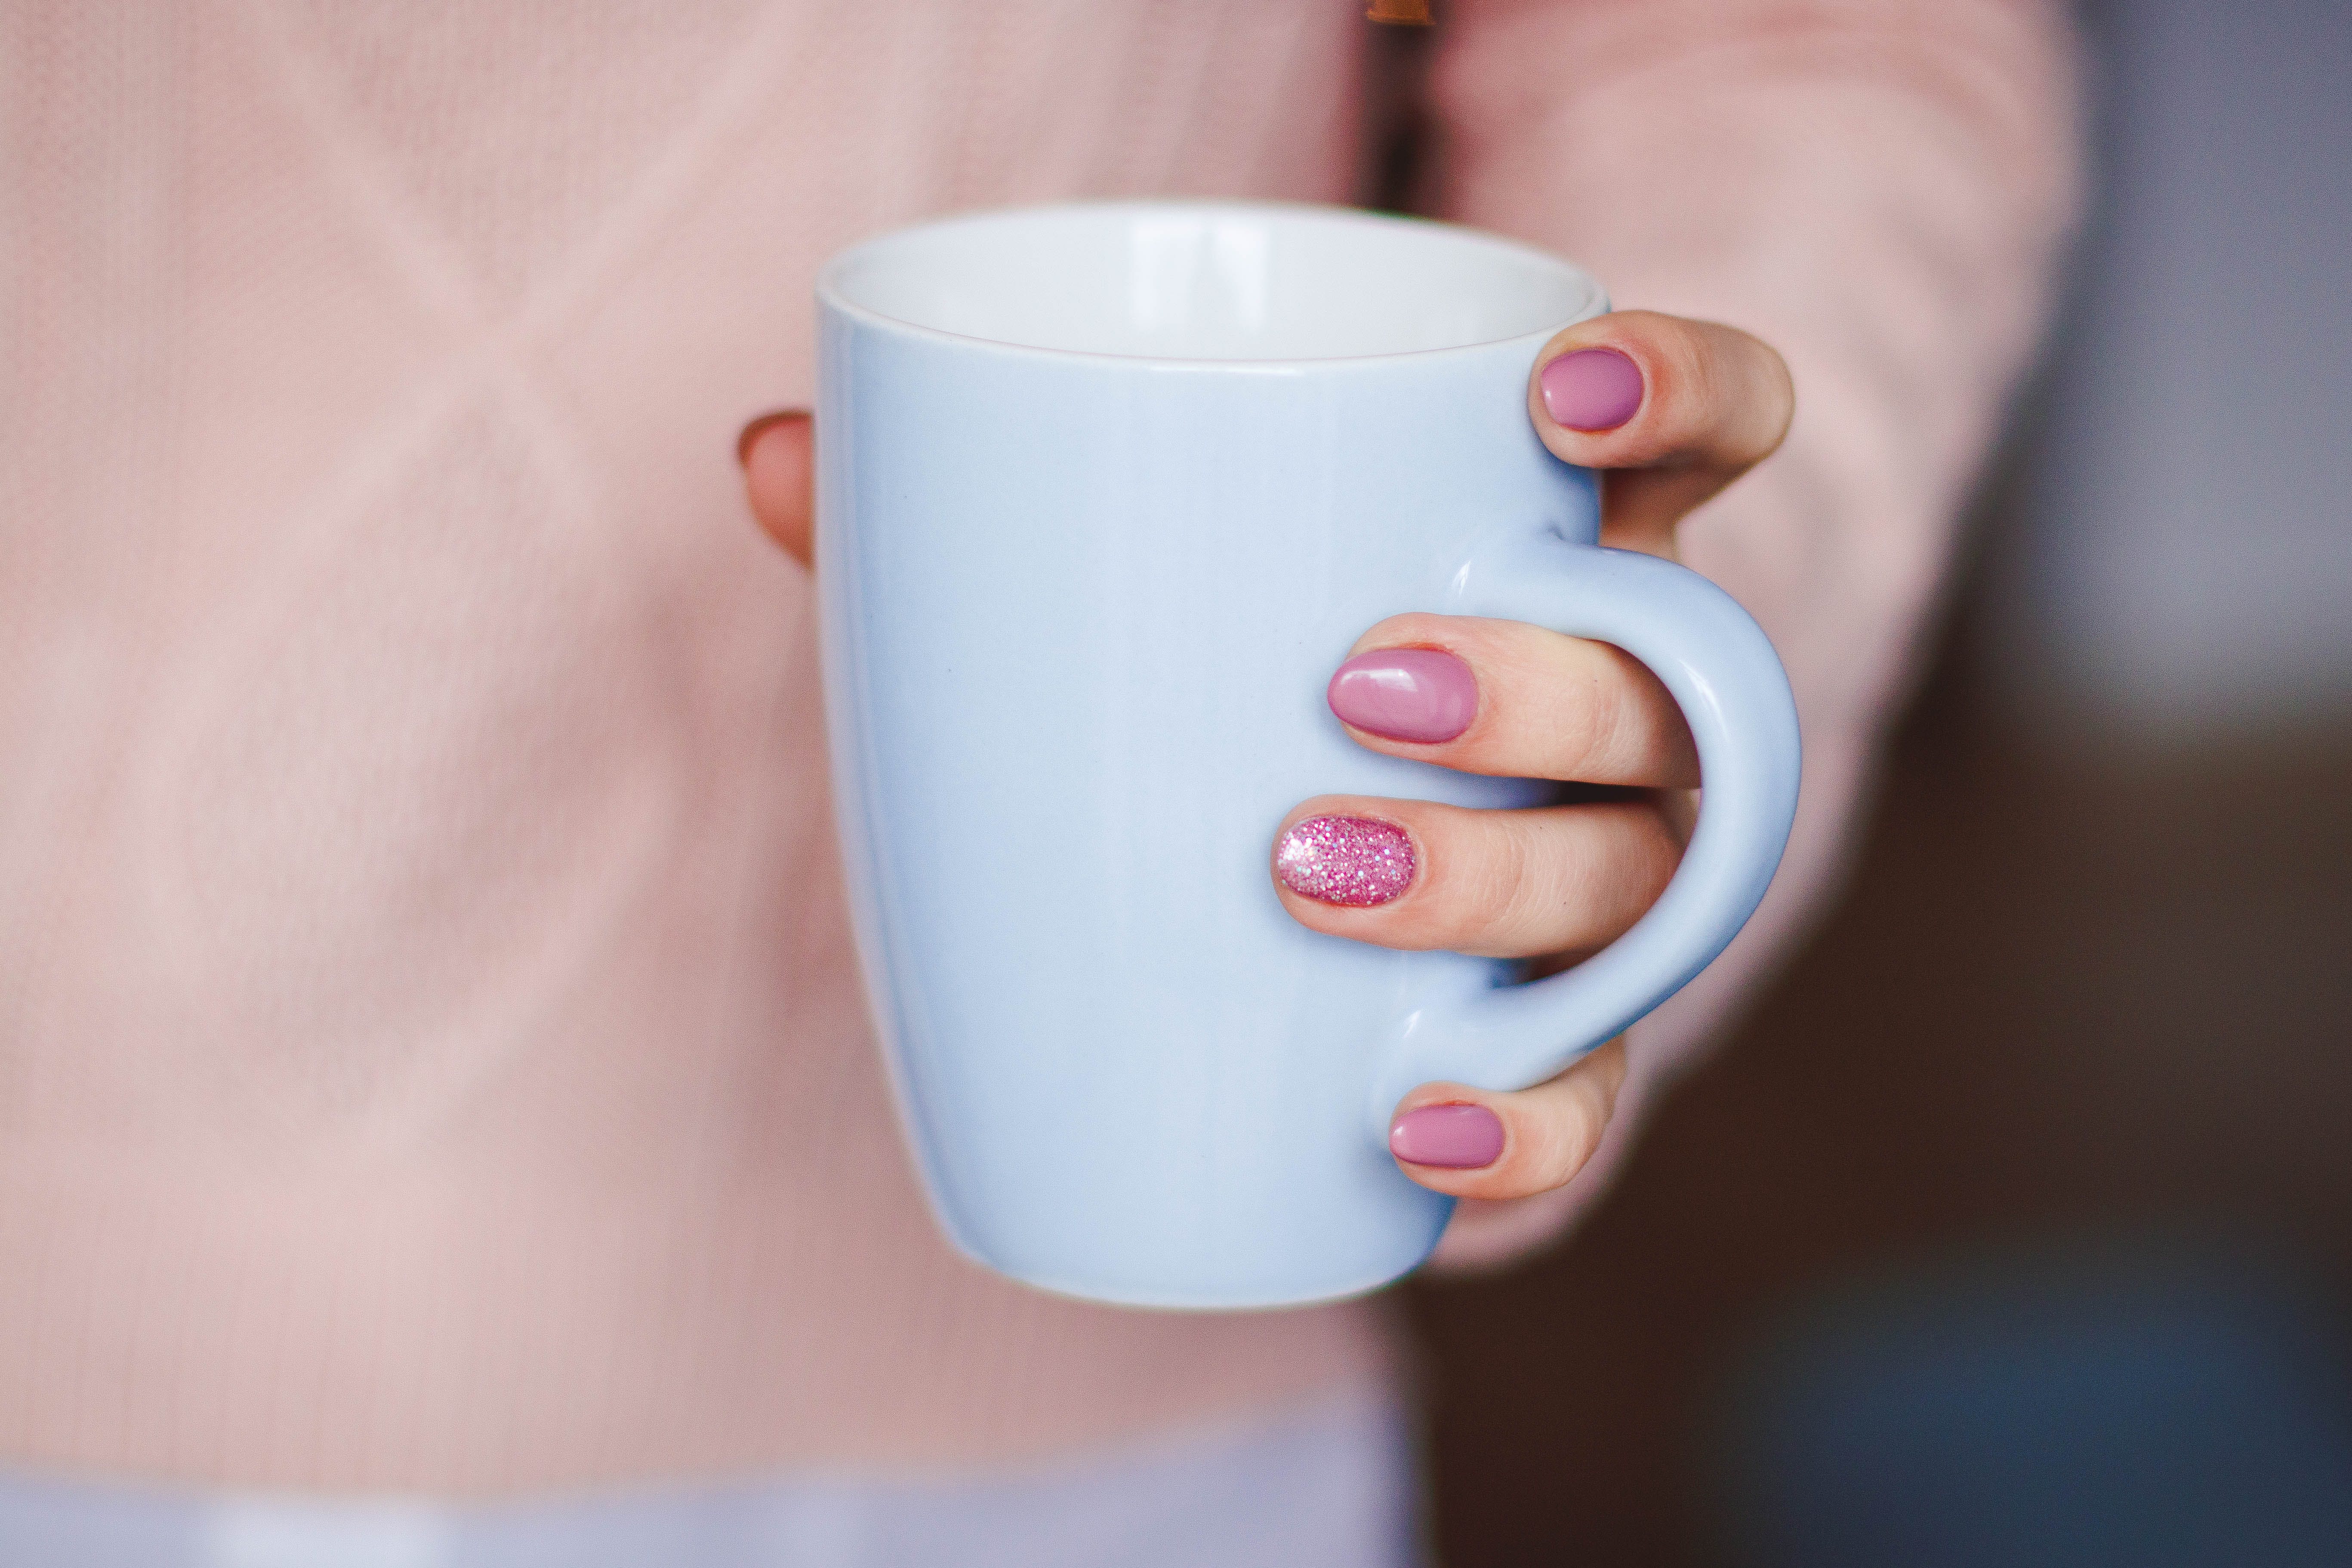 A person holding a mug | Source: Pexels